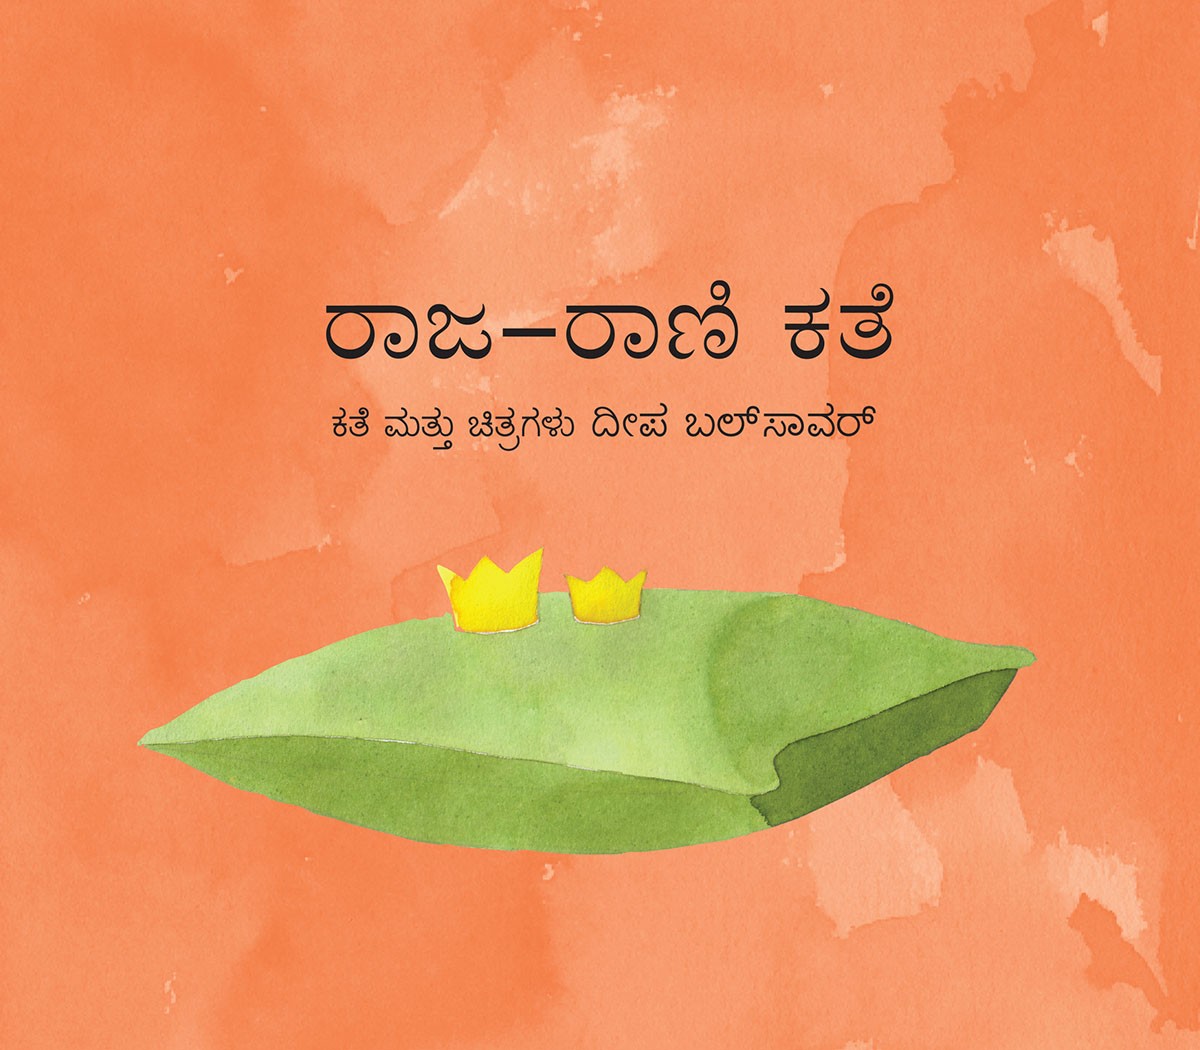 The Lonely King And Queen/Raaja-Raani Kathe (Kannada)